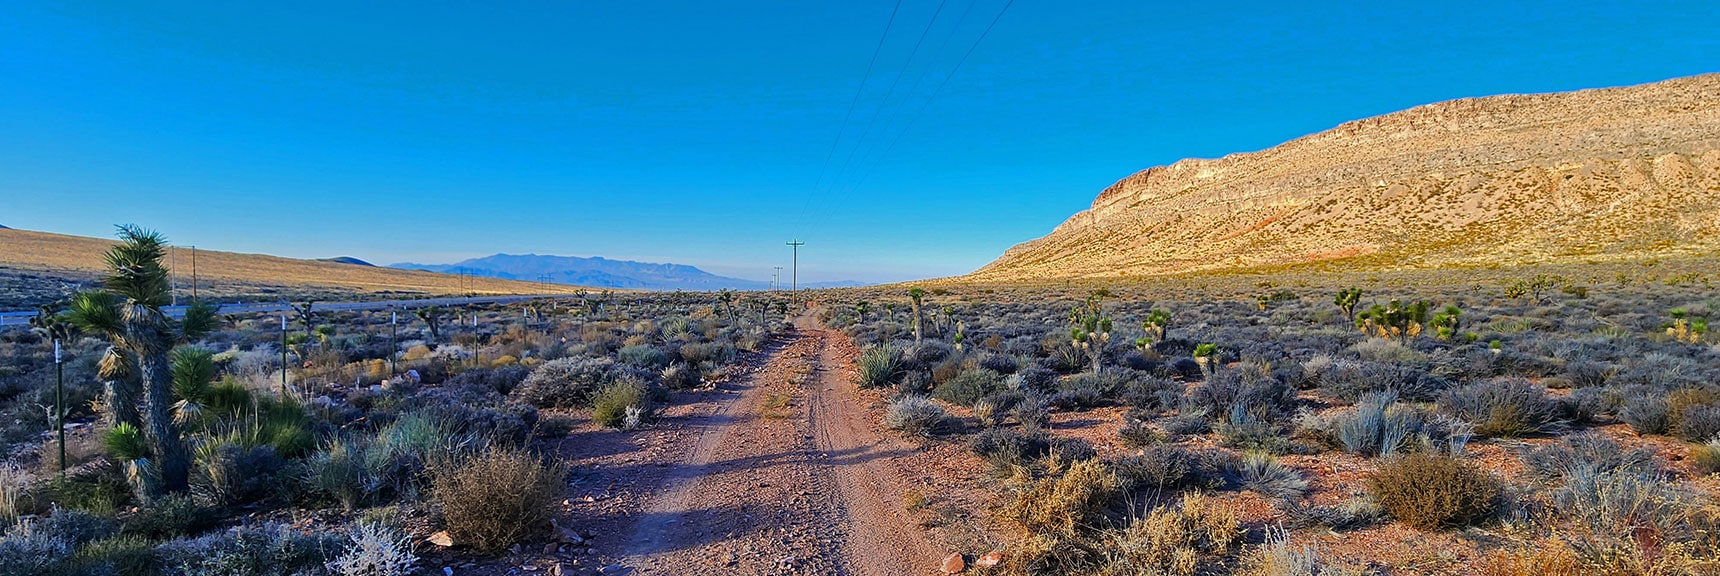 Powerline Maintenance Road Takes You Along South Side of Landmark Bluff | Landmark Bluff Summit | Lovell Canyon, Nevada